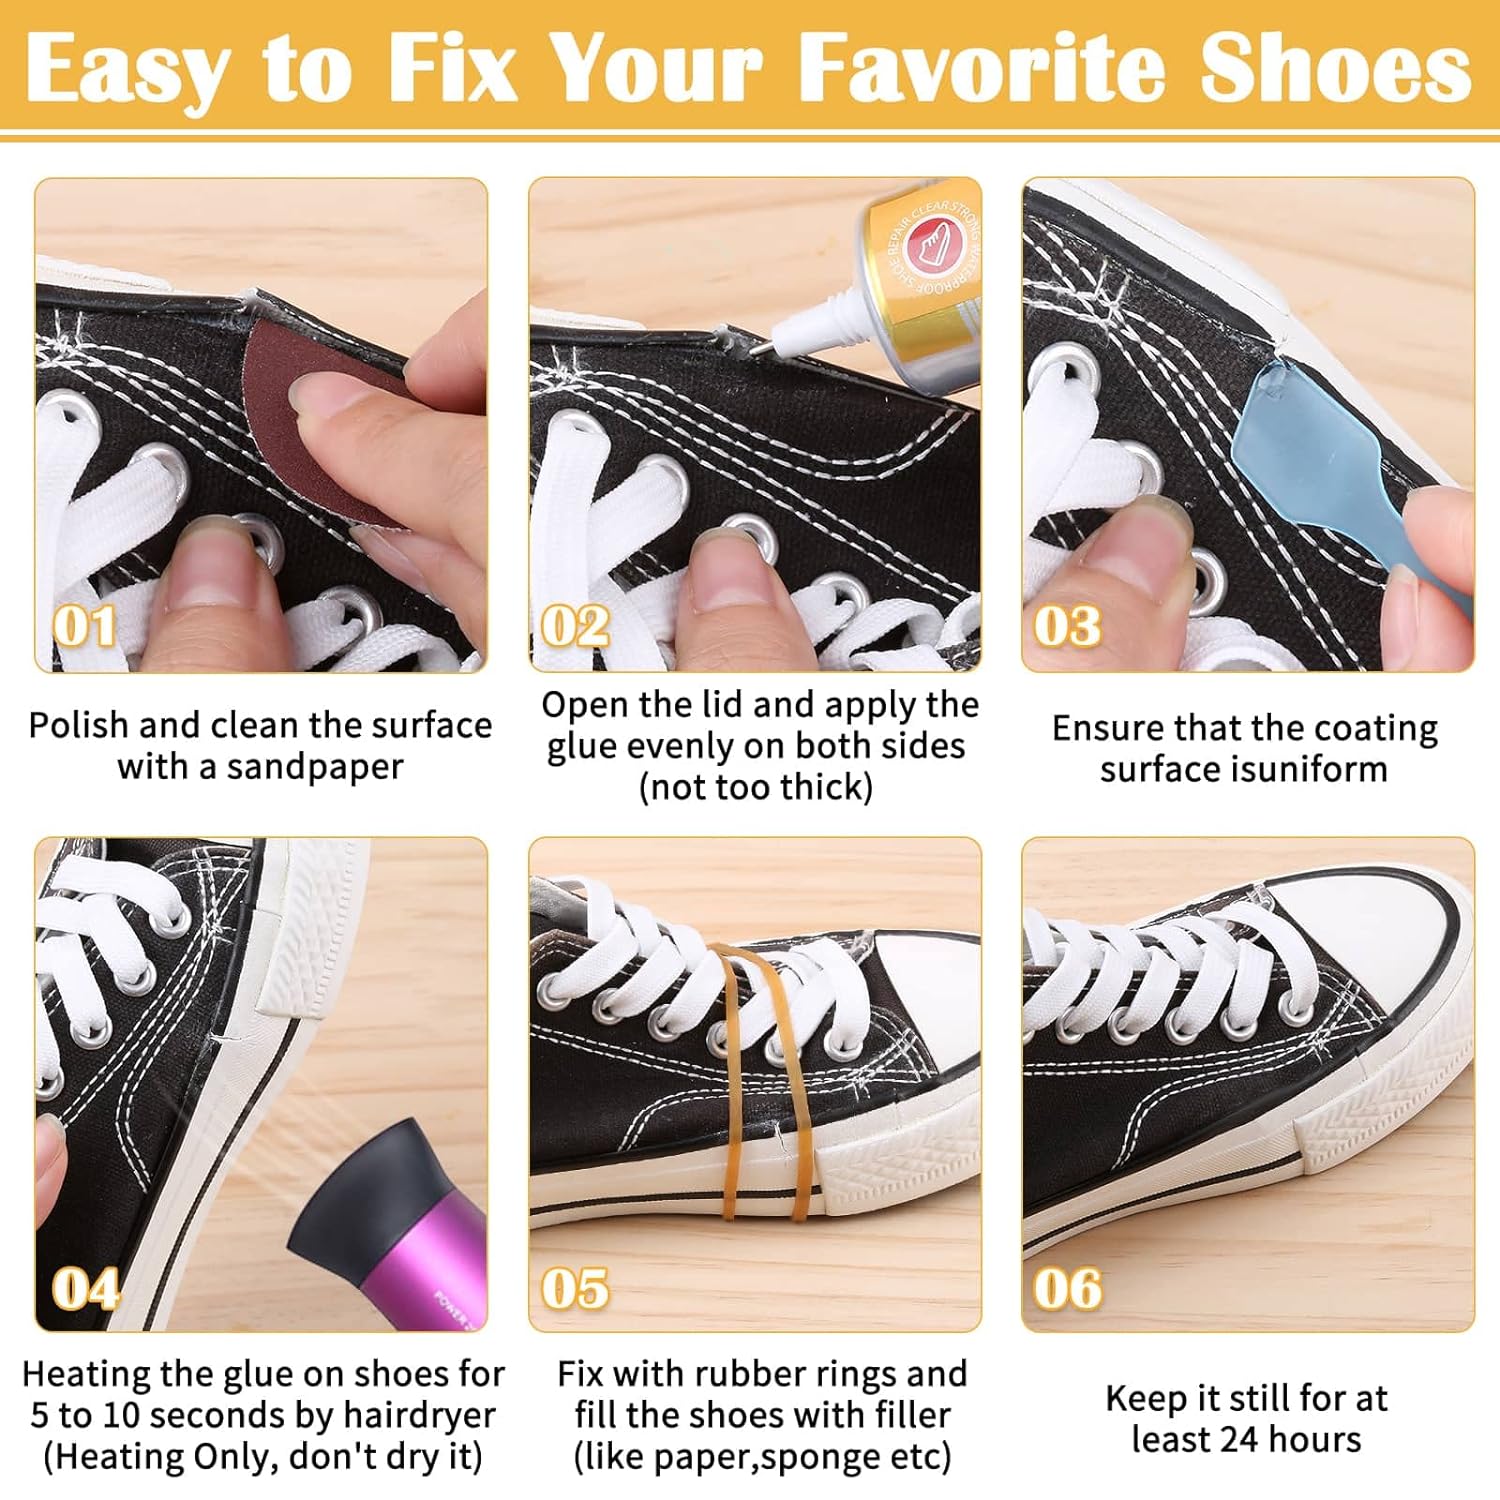 Generic Shoe Glue Sole Repair Adhesive, Evatage Waterproof Shoe Repair Glue Kit with Shoe Fix Glue for Sneakers Boots Leather Handbags